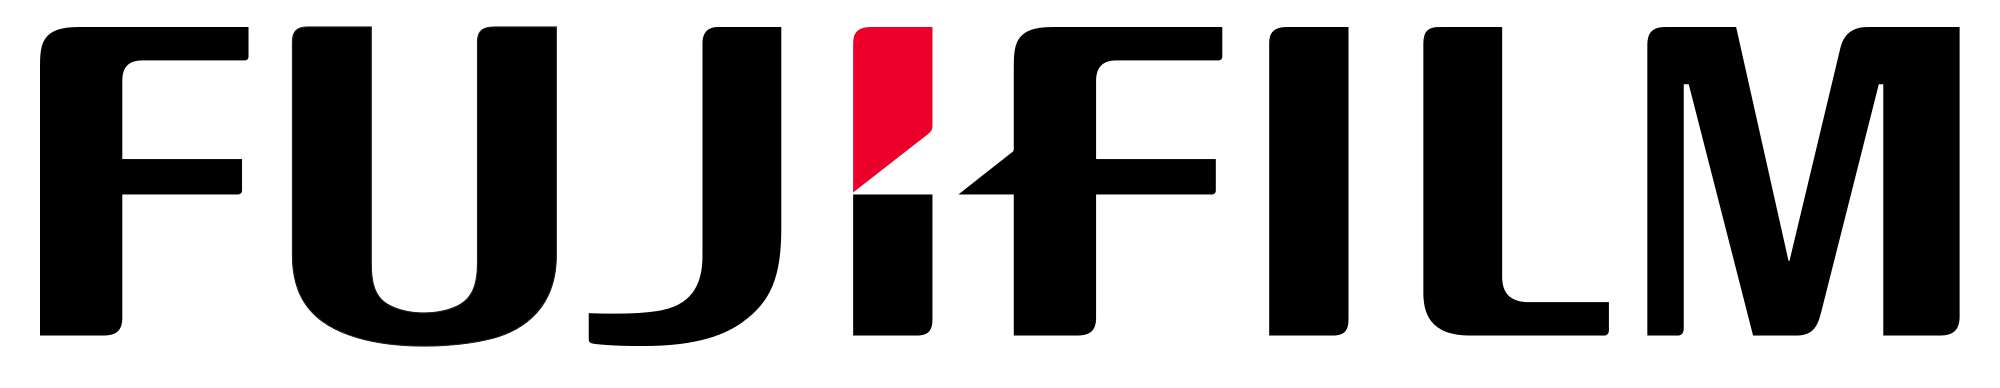 Fujifilm_logo.svg.png